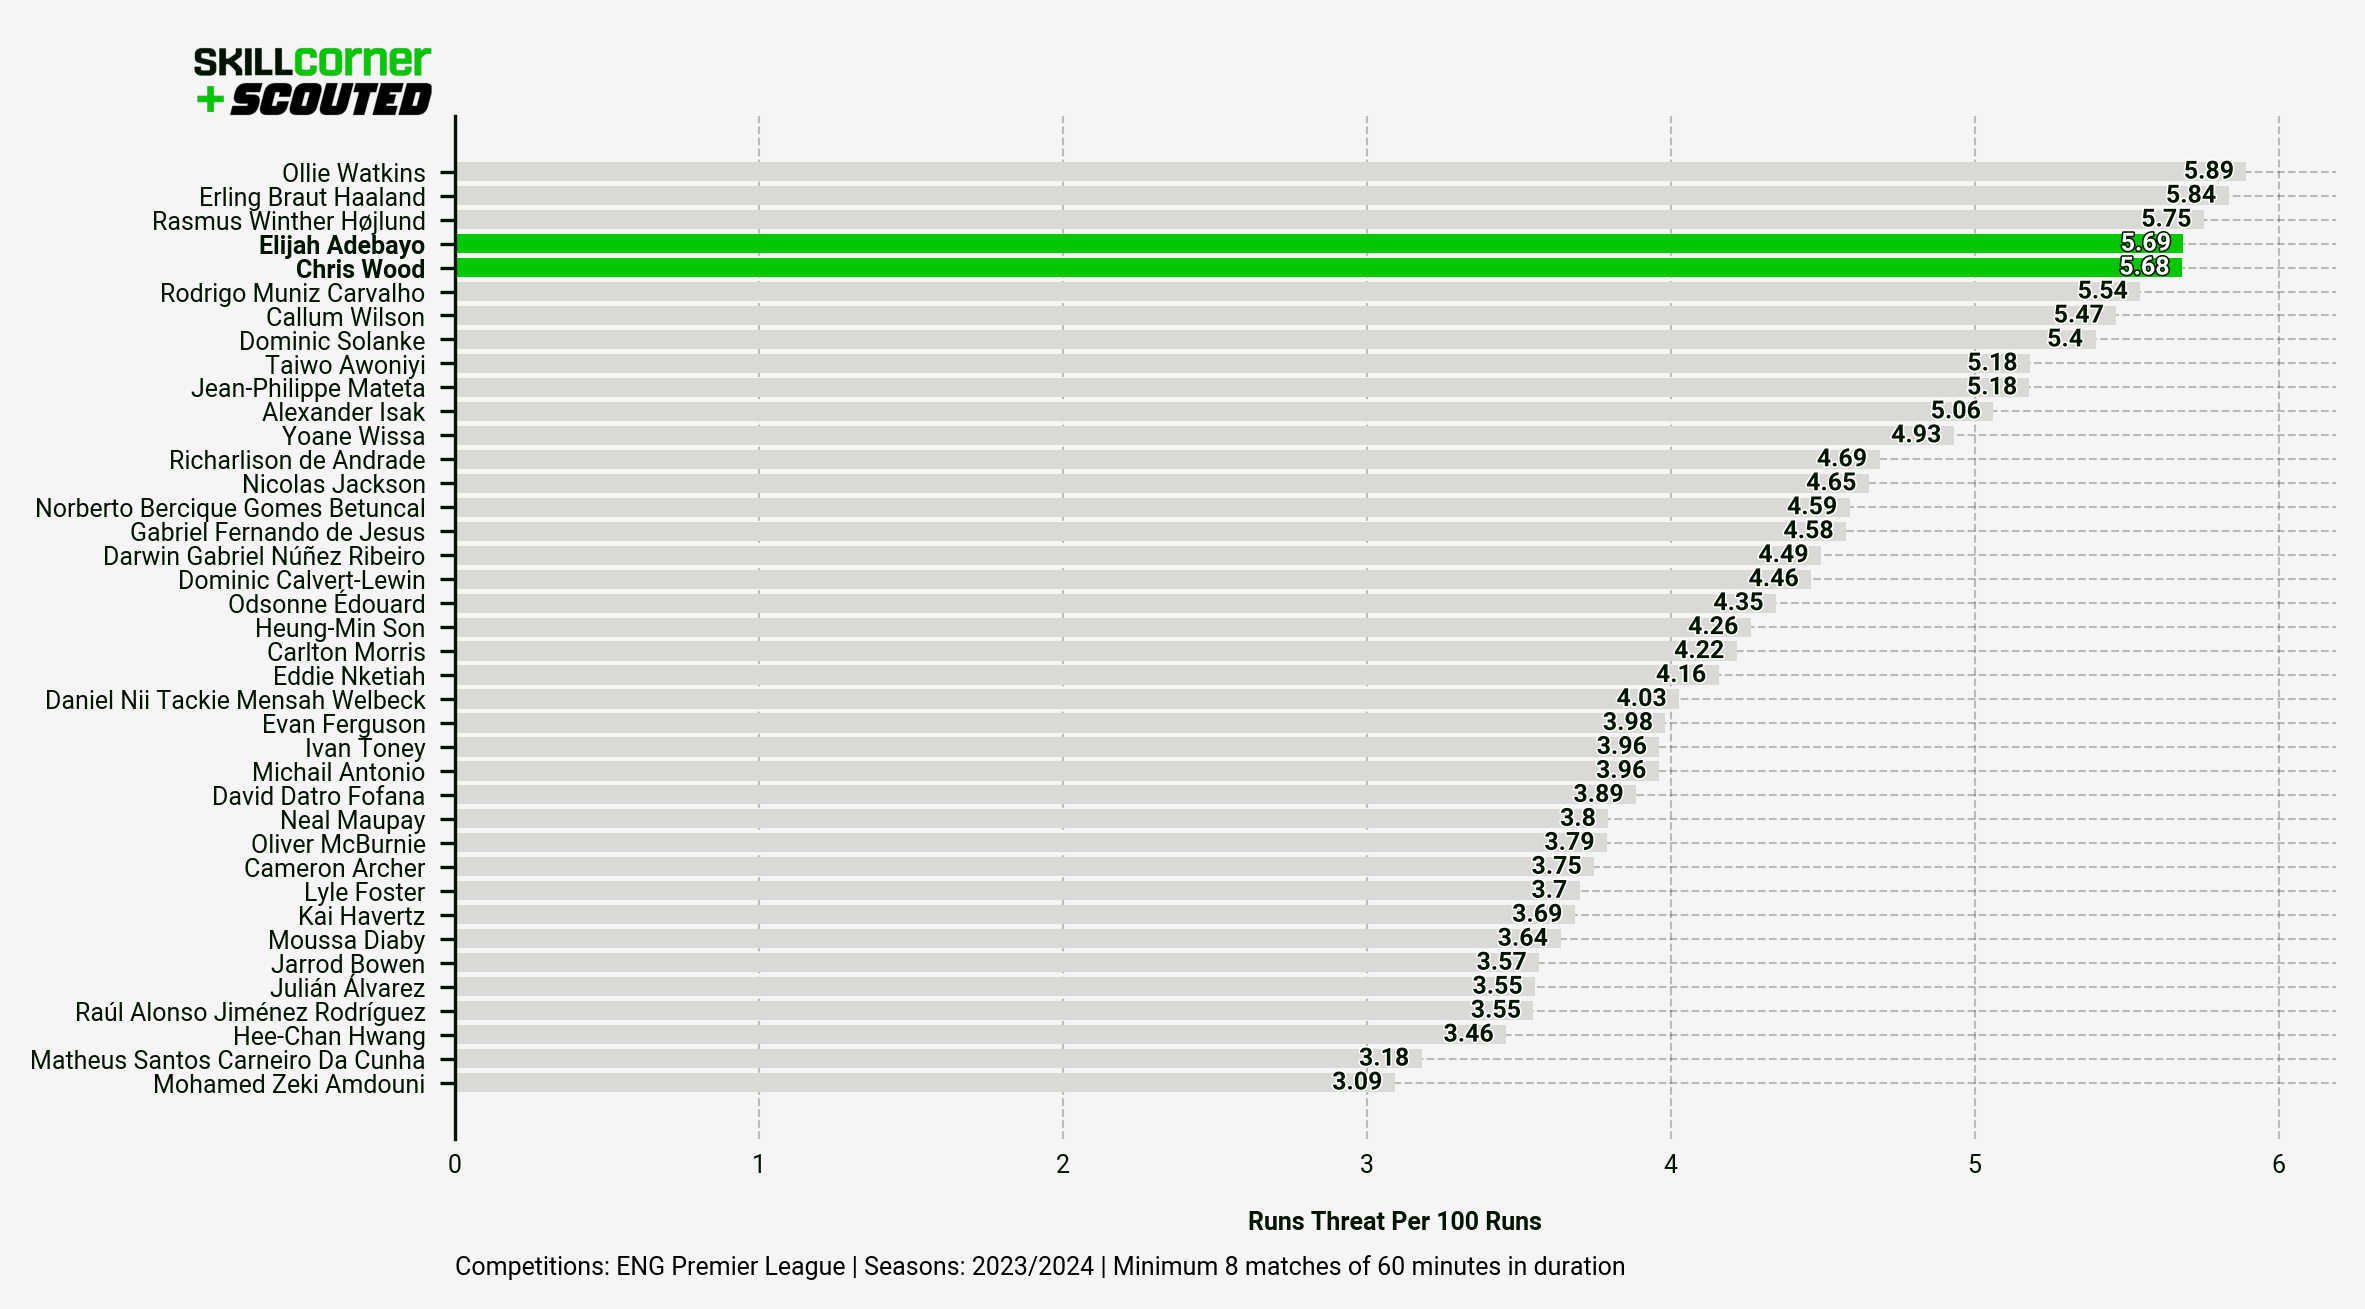 A SCOUTED-SkillCorner bar graph plotting Runs Threat per 100 Runs of Premier League forwards